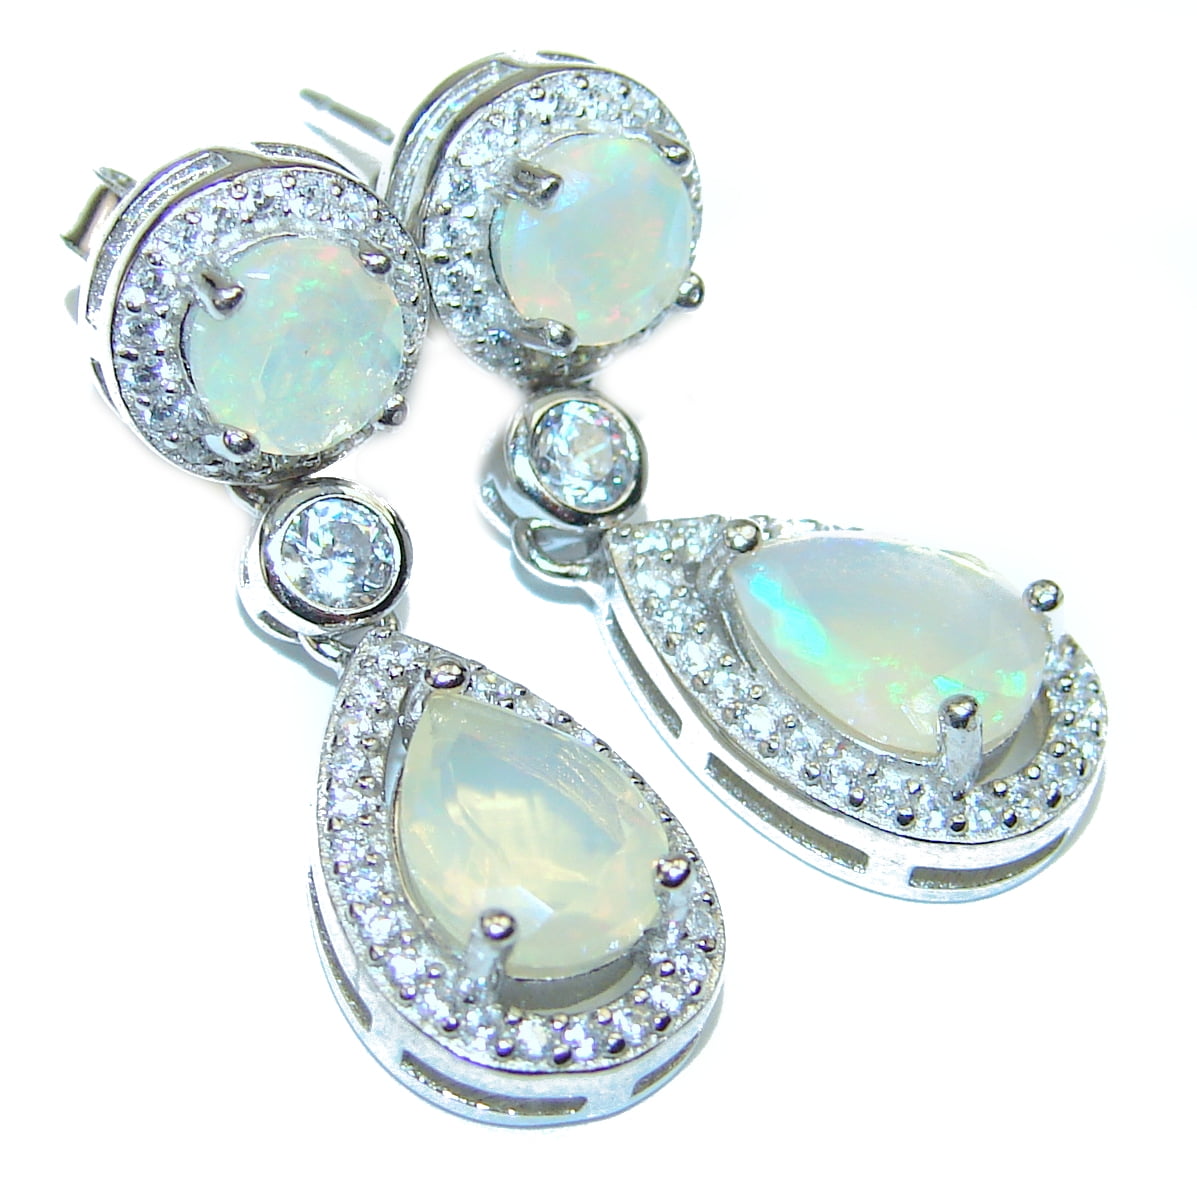 1 Pair Woman Fashion 925 Silver Jewelry Bird Fire Opal Charm Earring Pendant HOT 